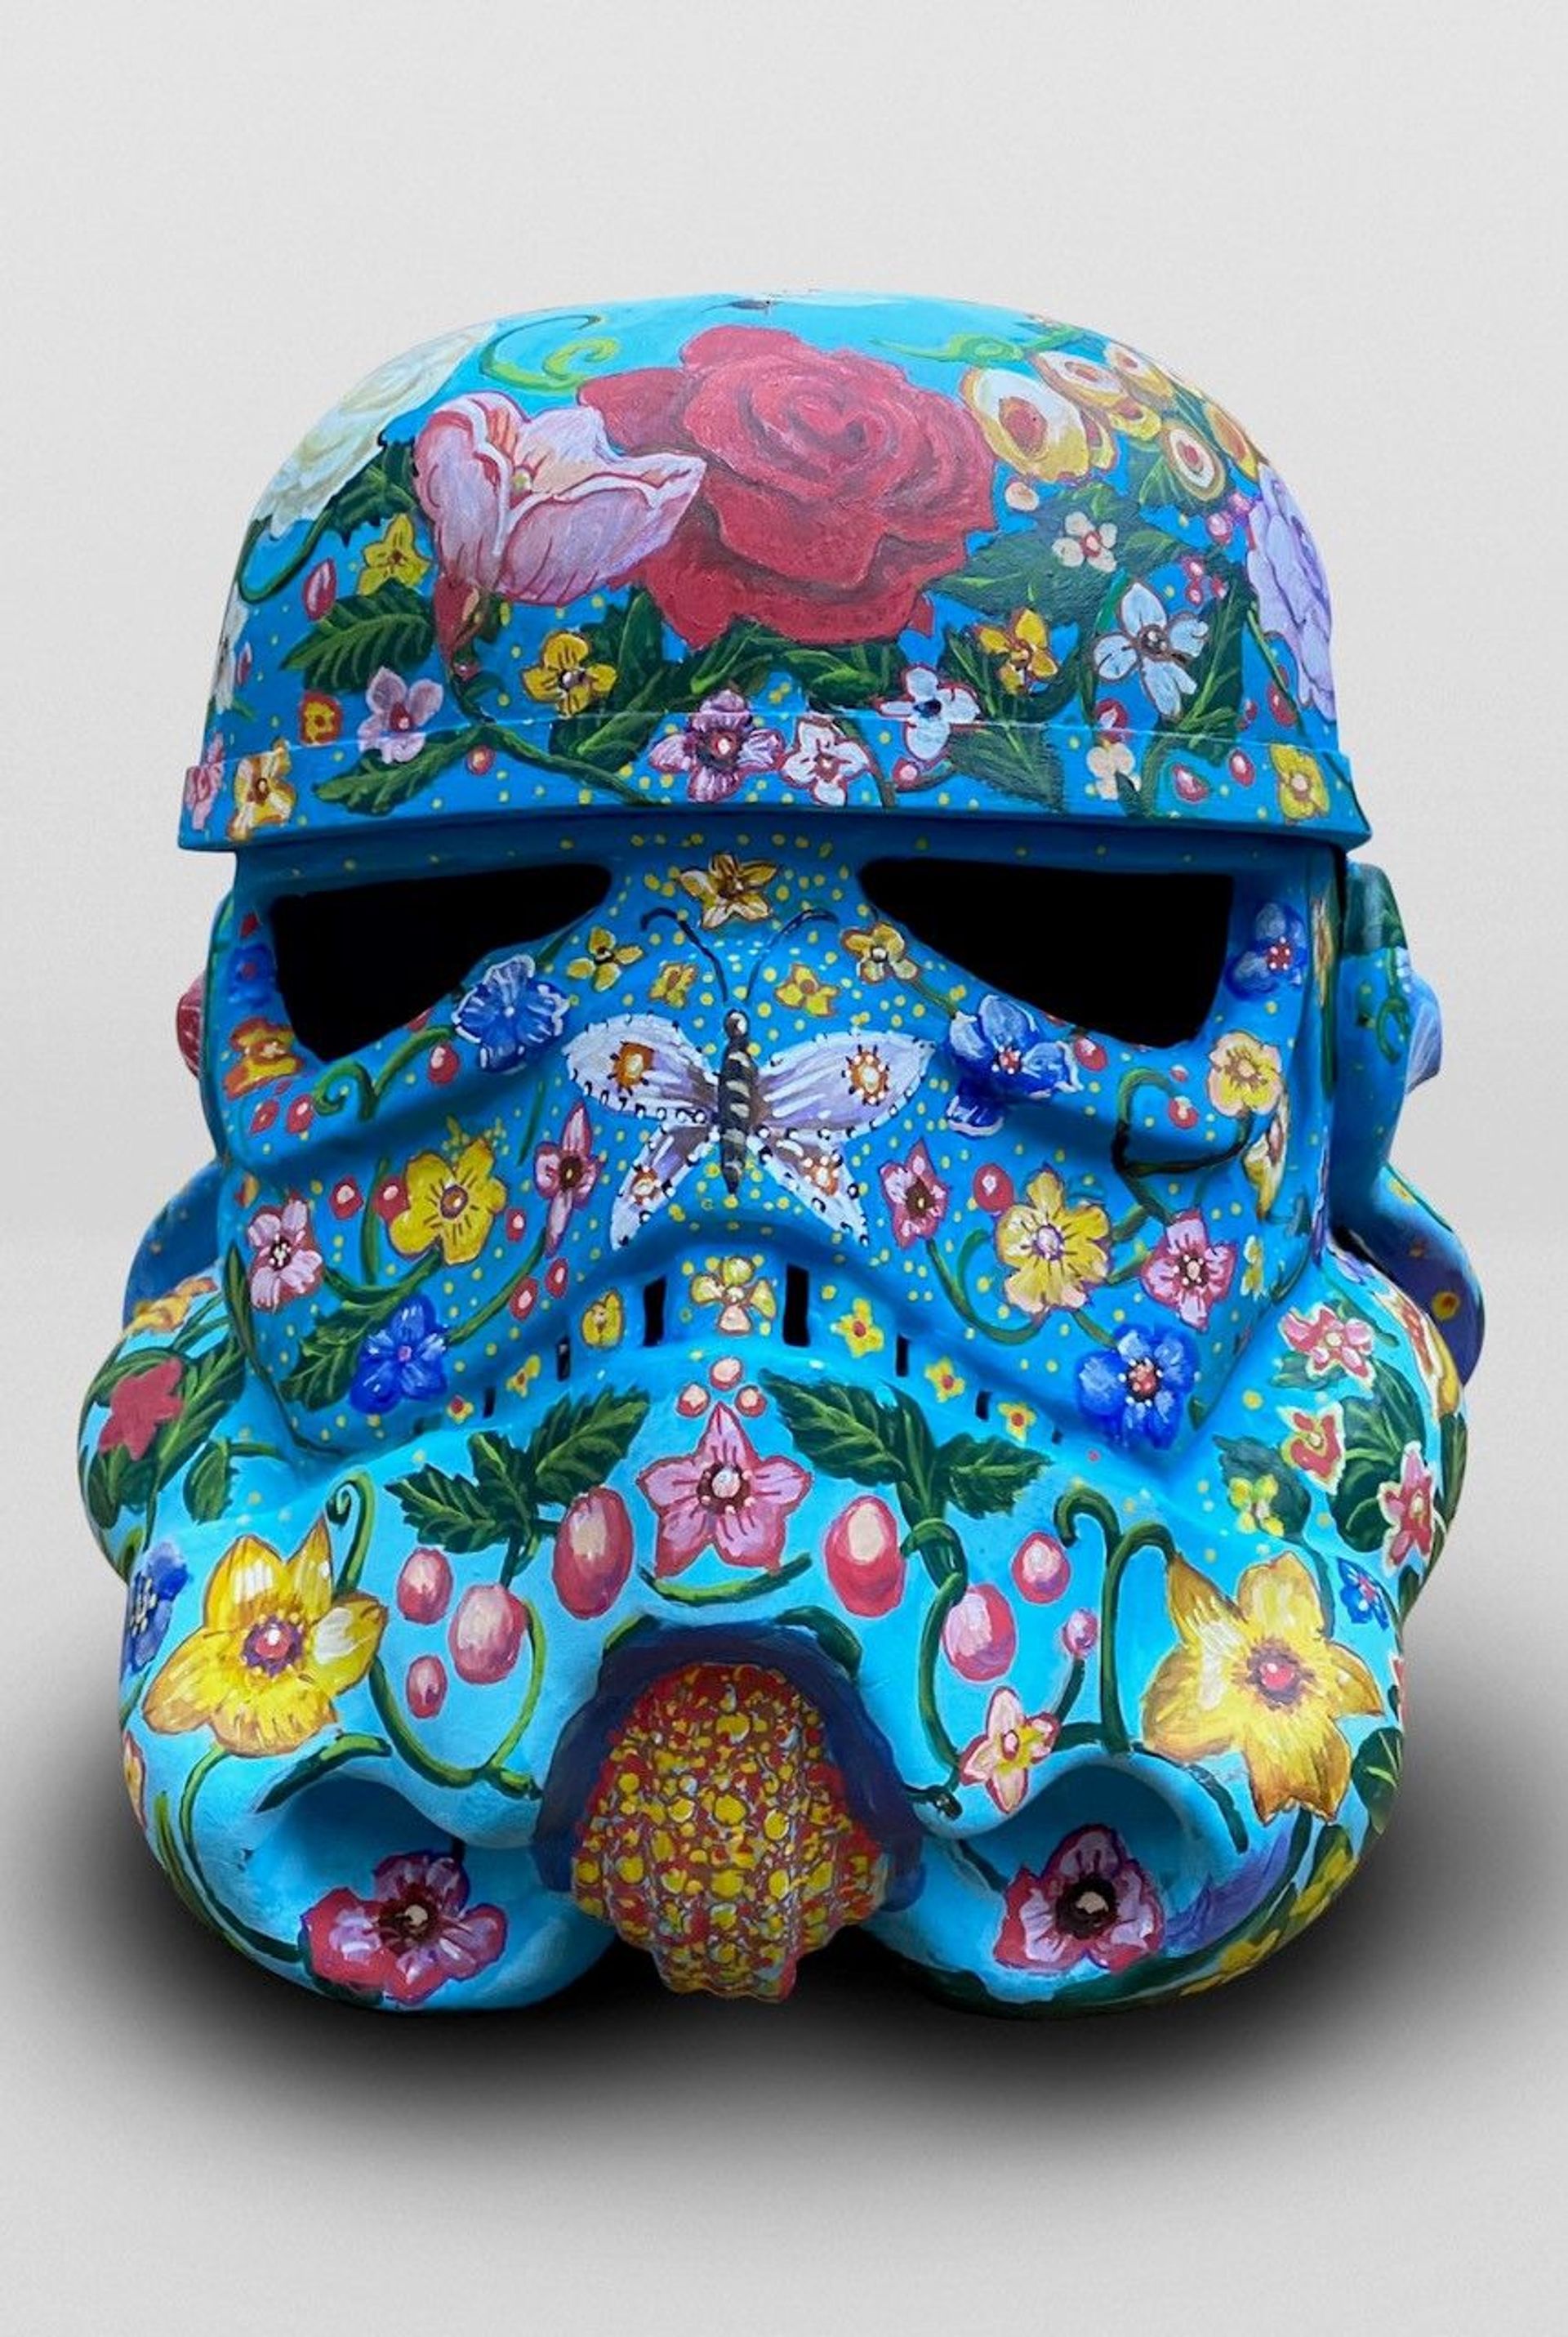 Unskilled Worker's Like Boy Flowers (2019), גיר, פסטל, דיו, עט ופחם על קסדת Stormtrooper - Art Wars מוצע למכירה כ- NFT המצורף לתמונה של היצירה

באדיבות האמן